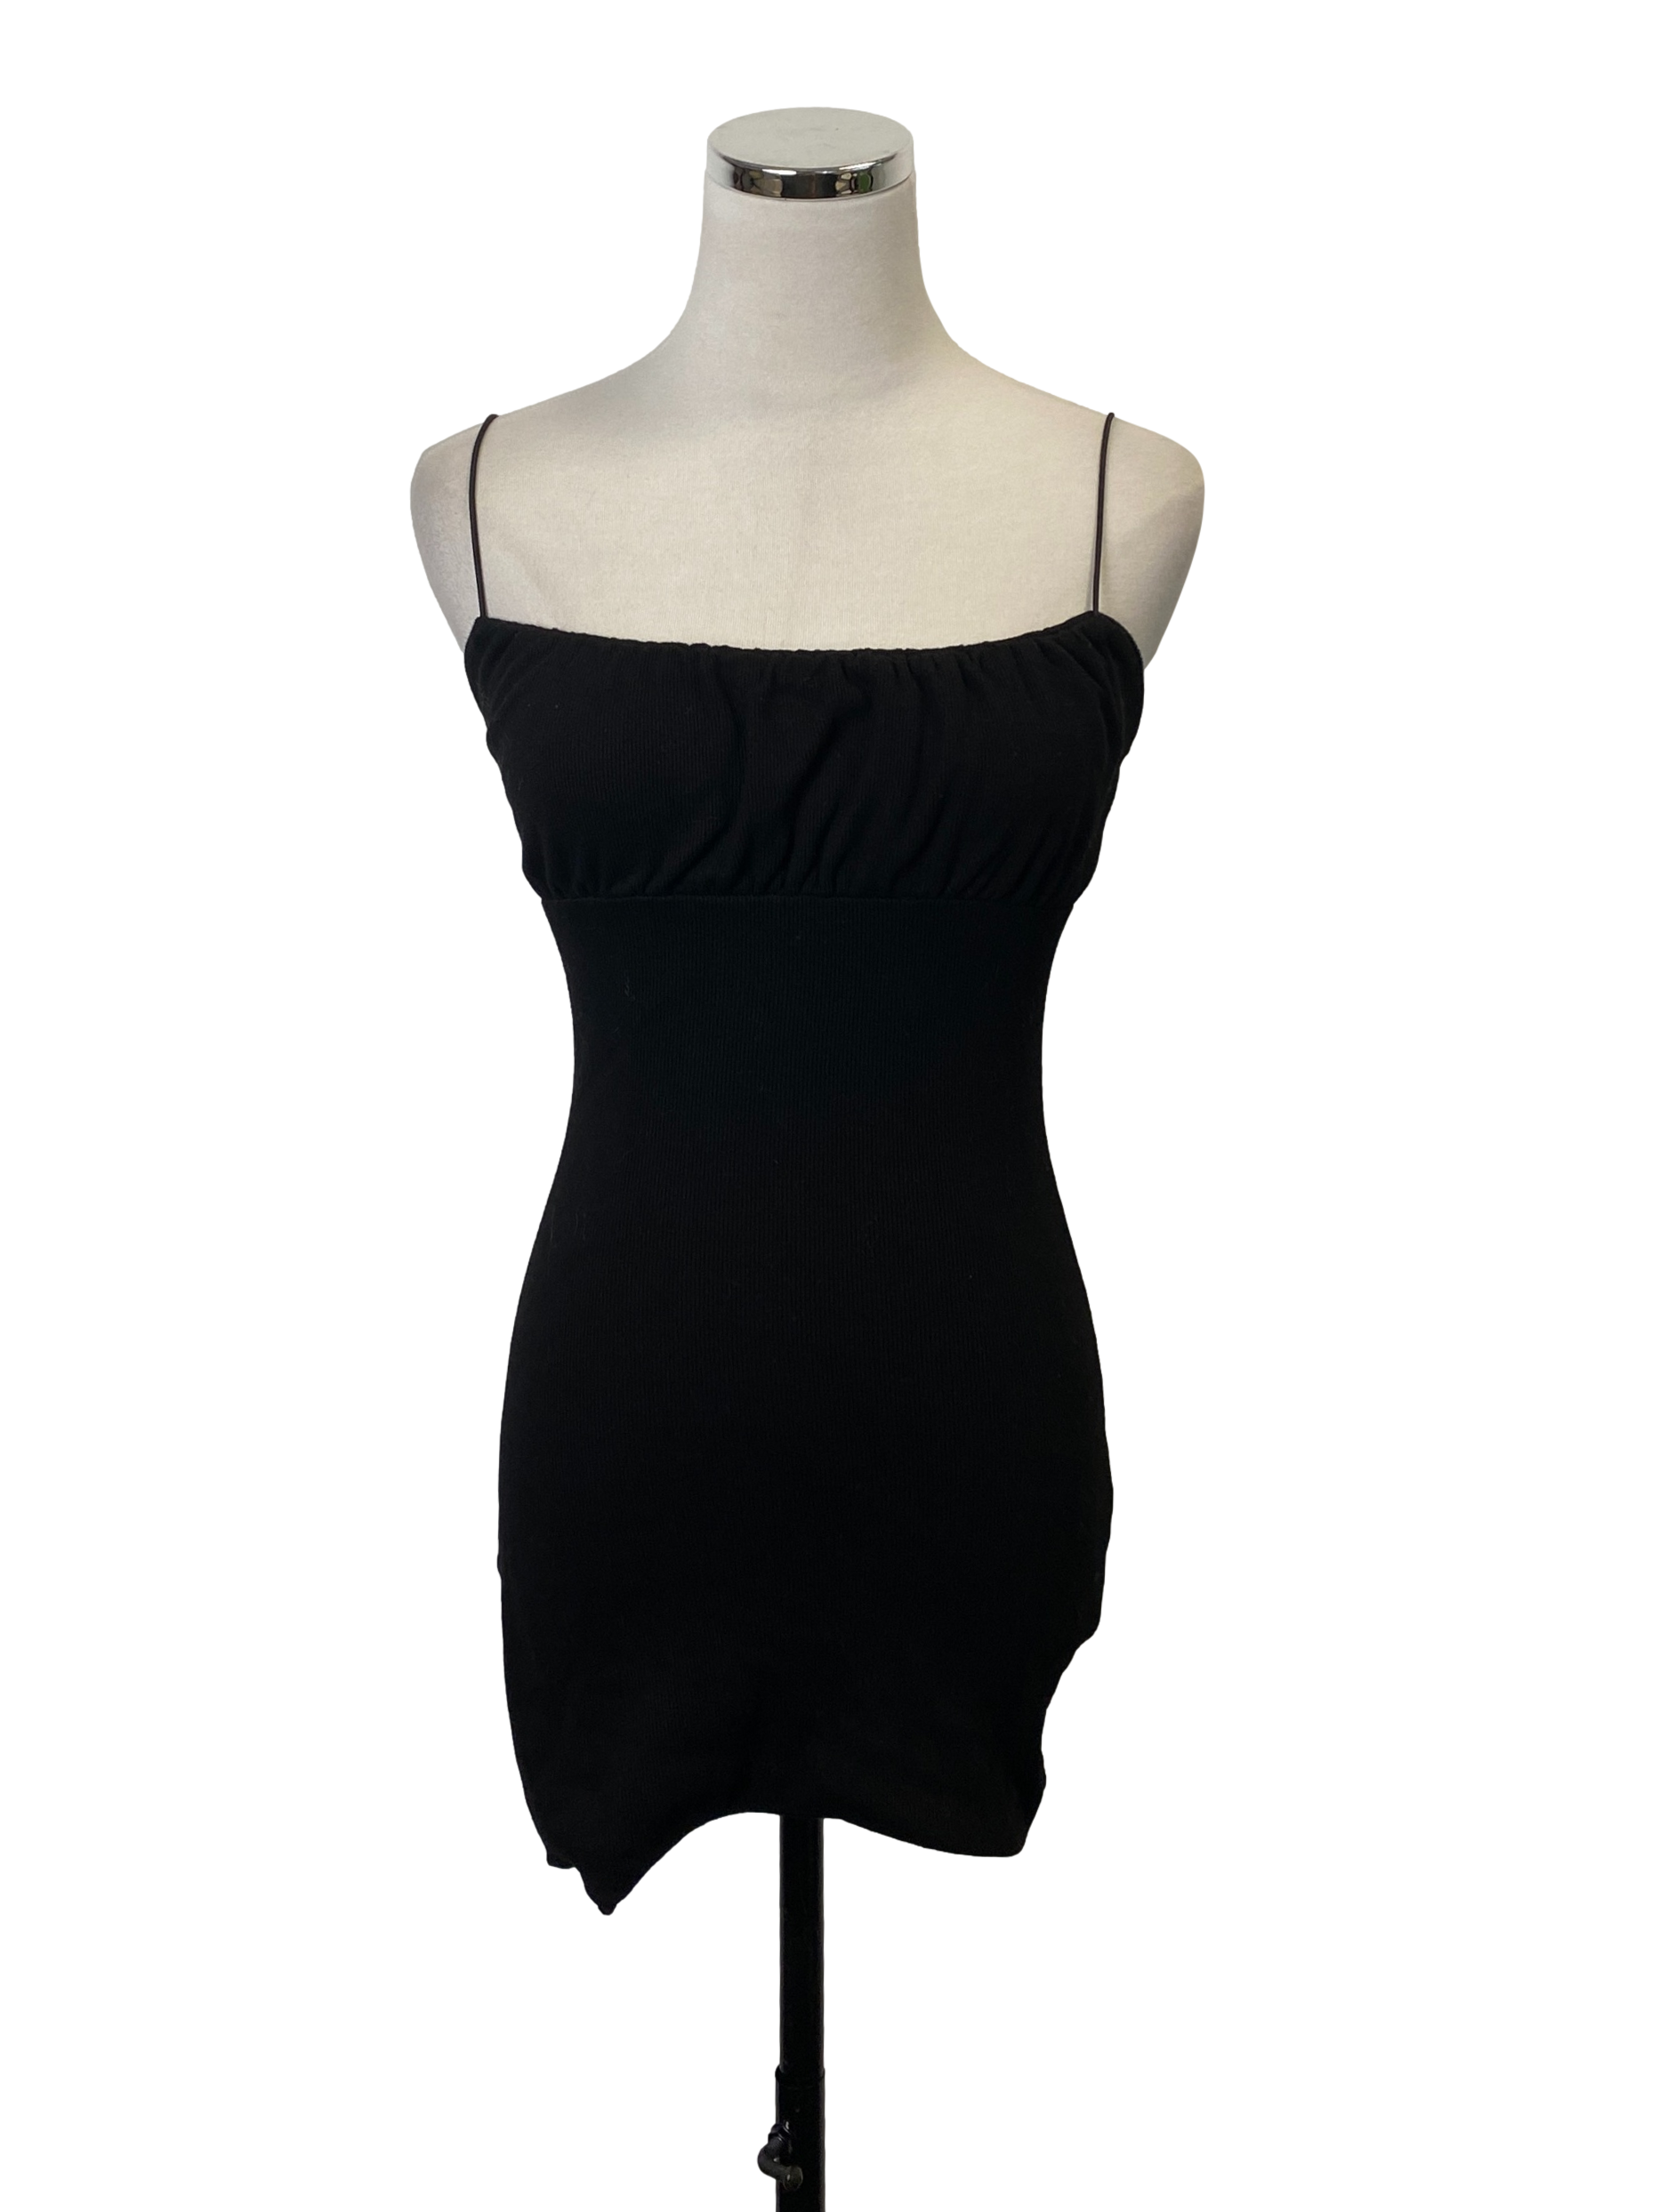 Pitch Black Sleeveless Dress